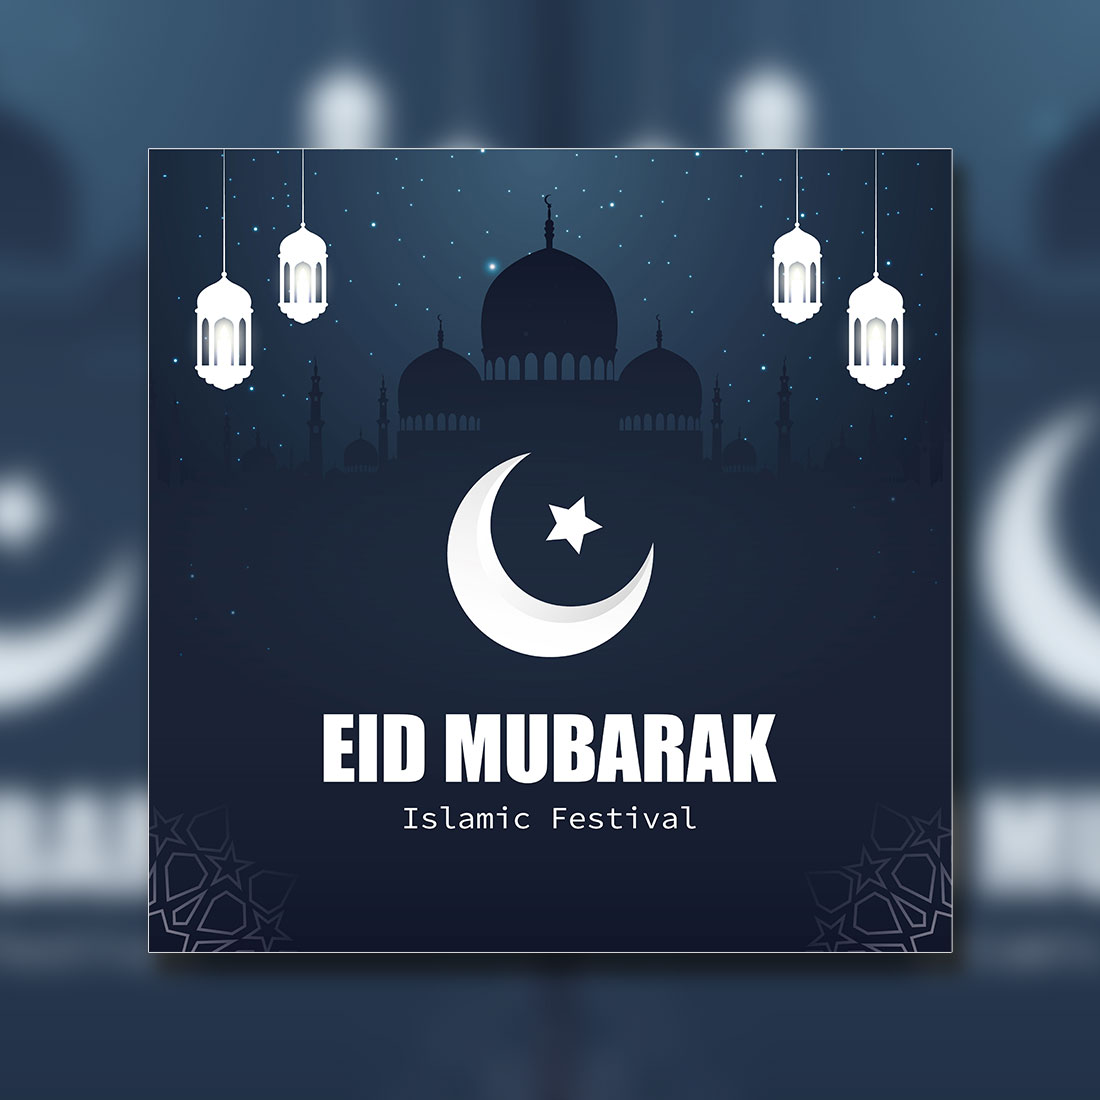 Eid Mubarak Greeting Card cover image.